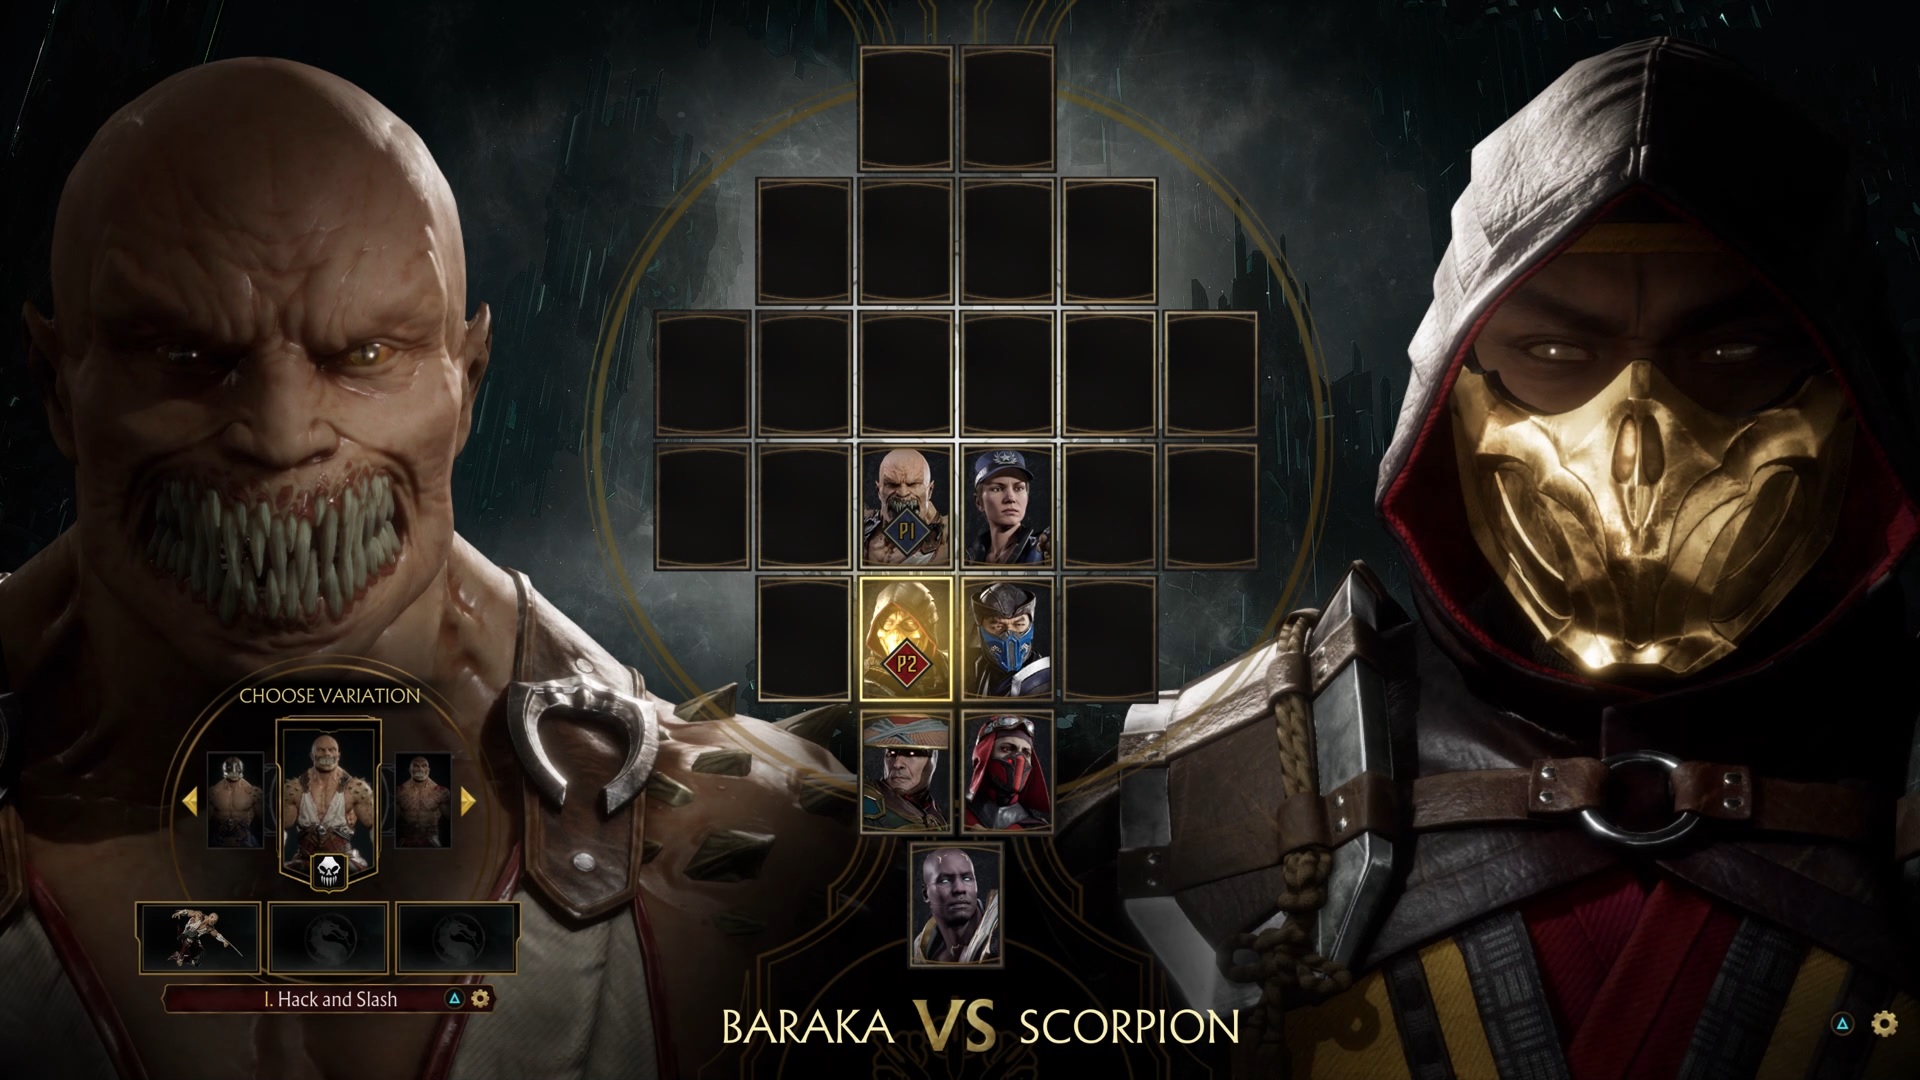 Skarlet and Baraka return in Mortal Kombat 11